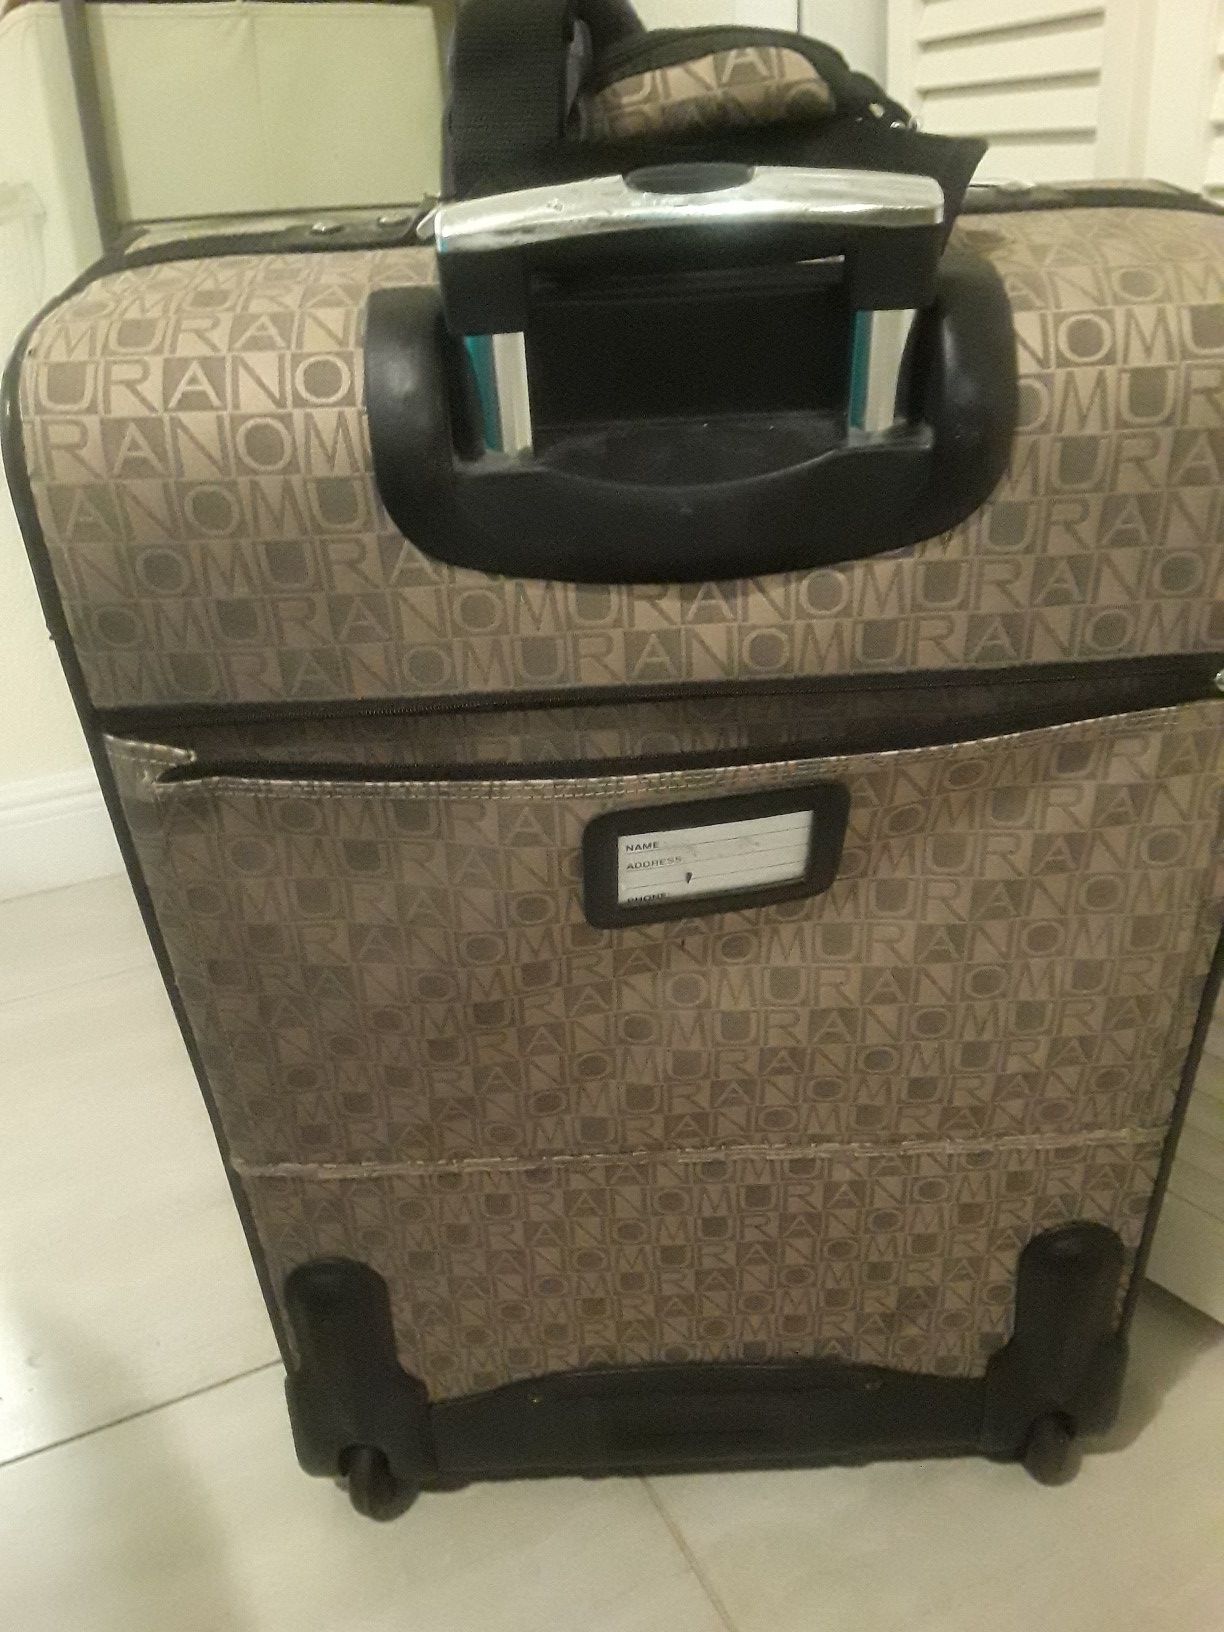 Murano stylish luggage